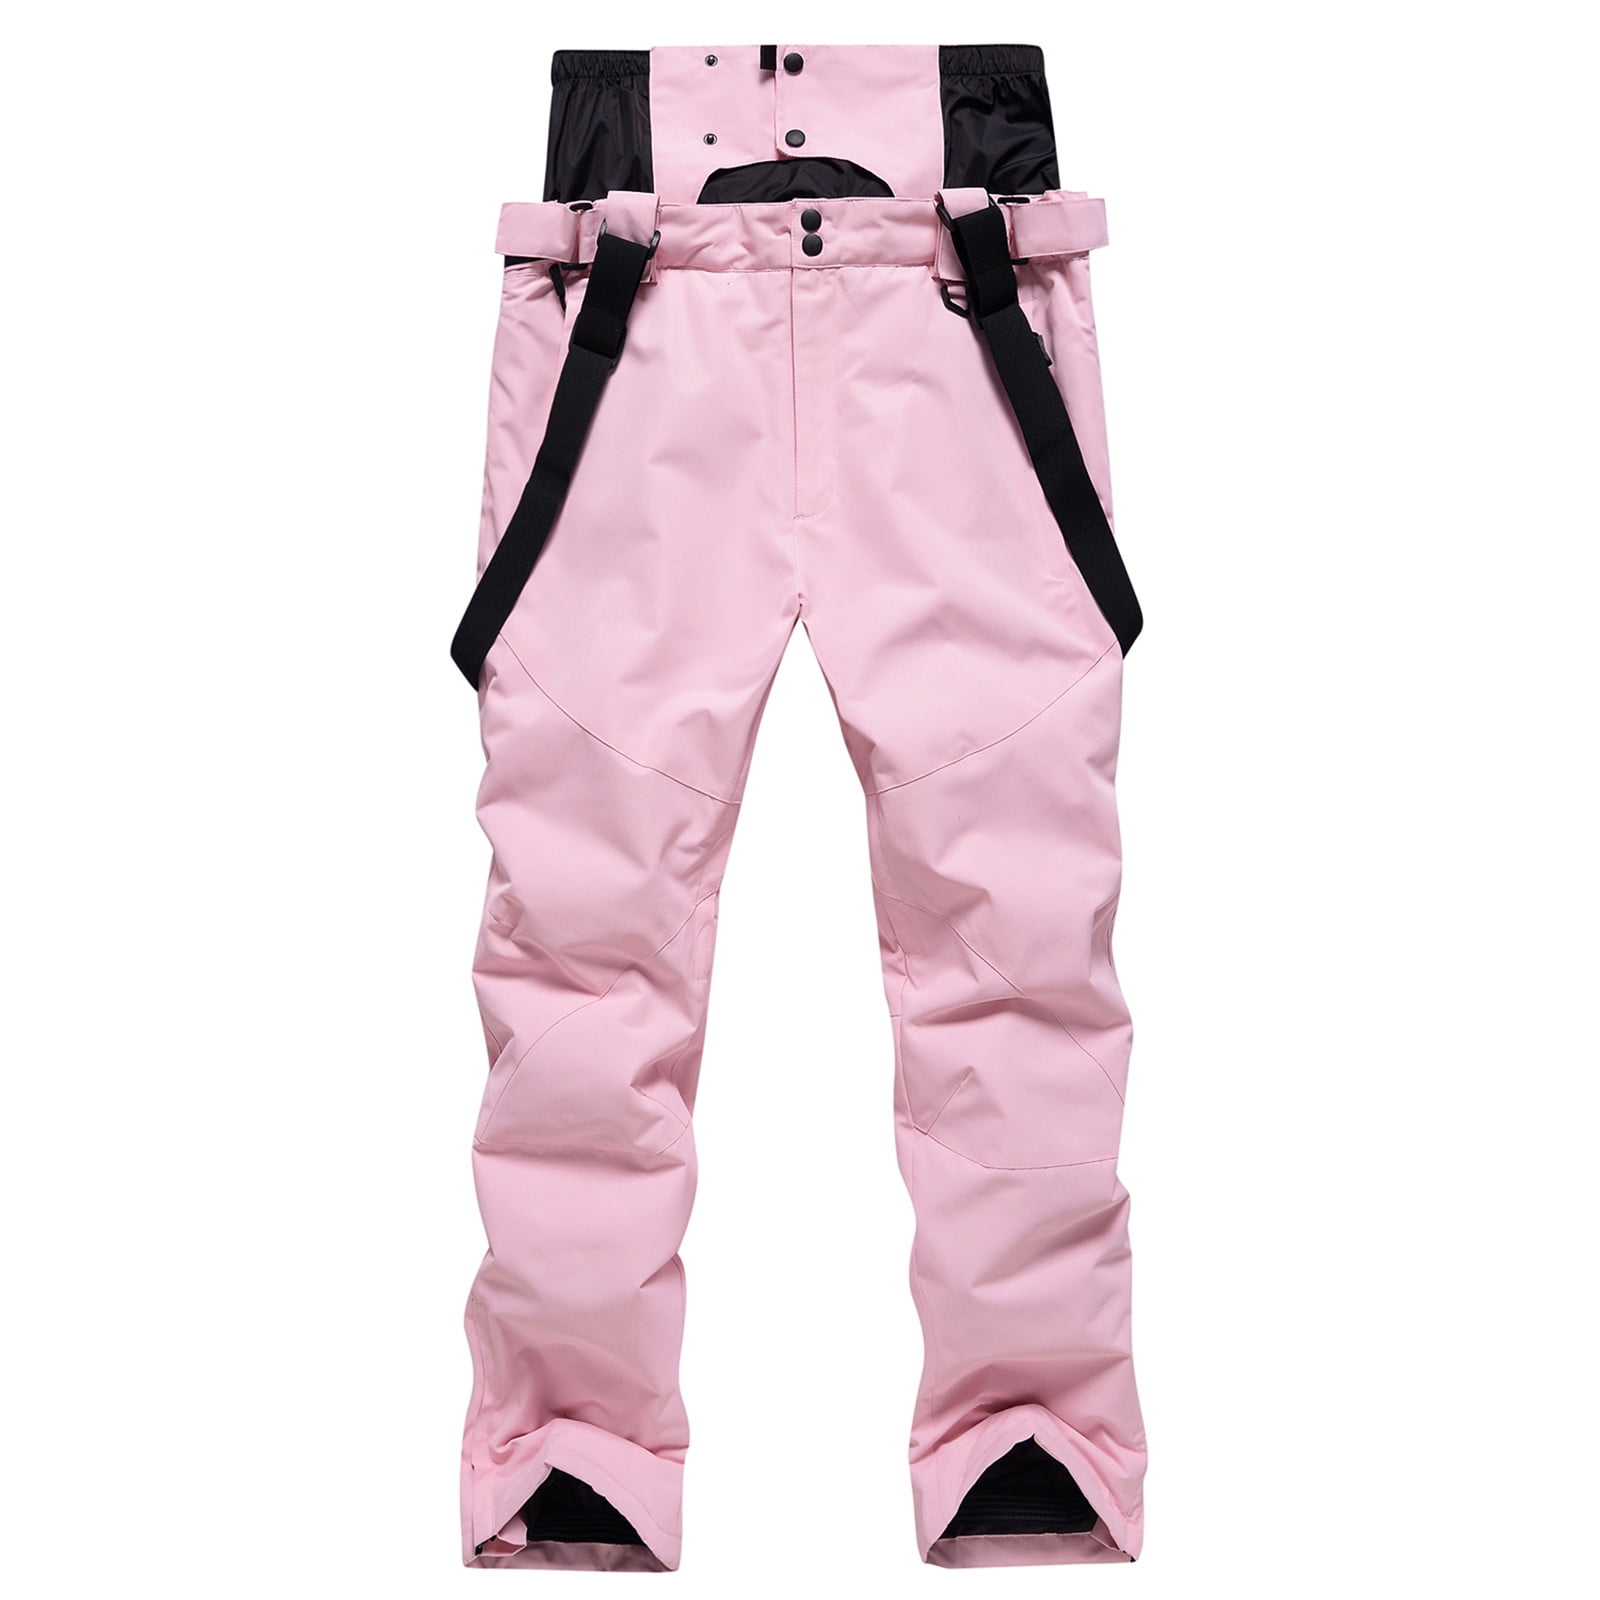 XFLWAM Women's Ski Snow Pants Waterproof Wind Lightweight Thermal Pants  Outdoor Hiking Mountain Softshell with Belt Pink XL 